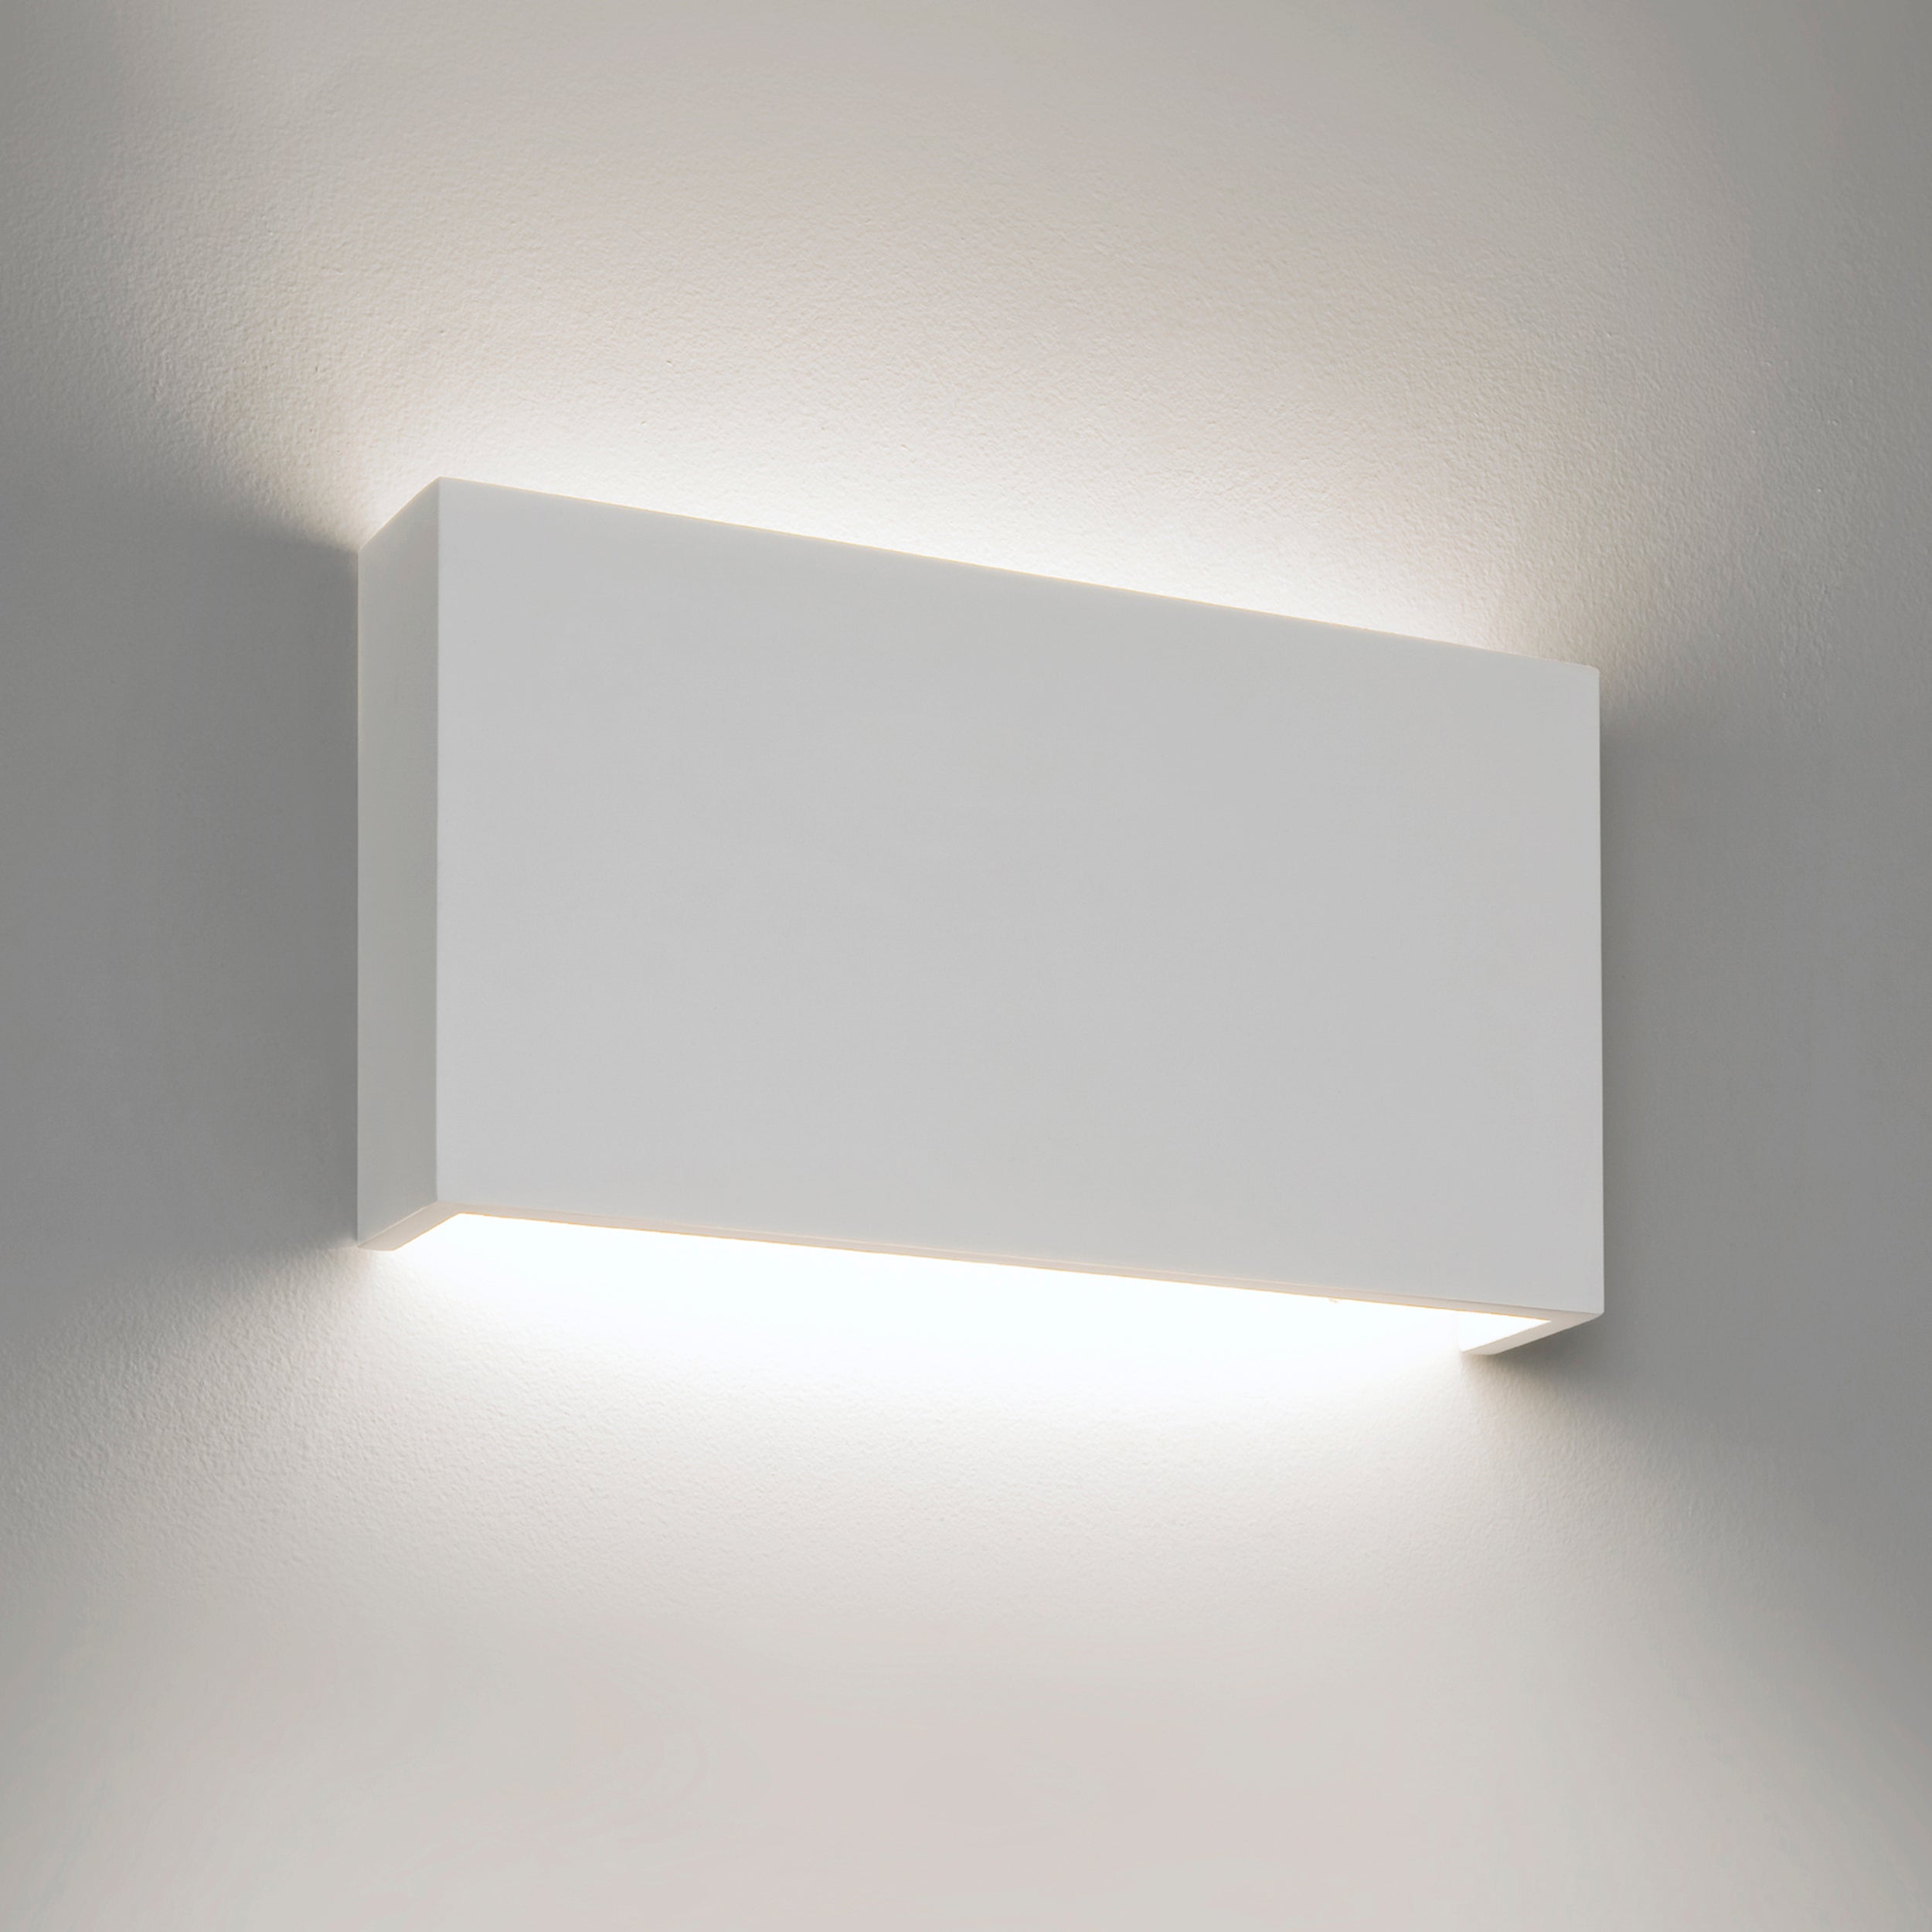 Astro Lighting Rio Wall Light Fixtures Astro Lighting 2.36x12.8x7.48 Plaster Yes (Integral), Mid-Power LED